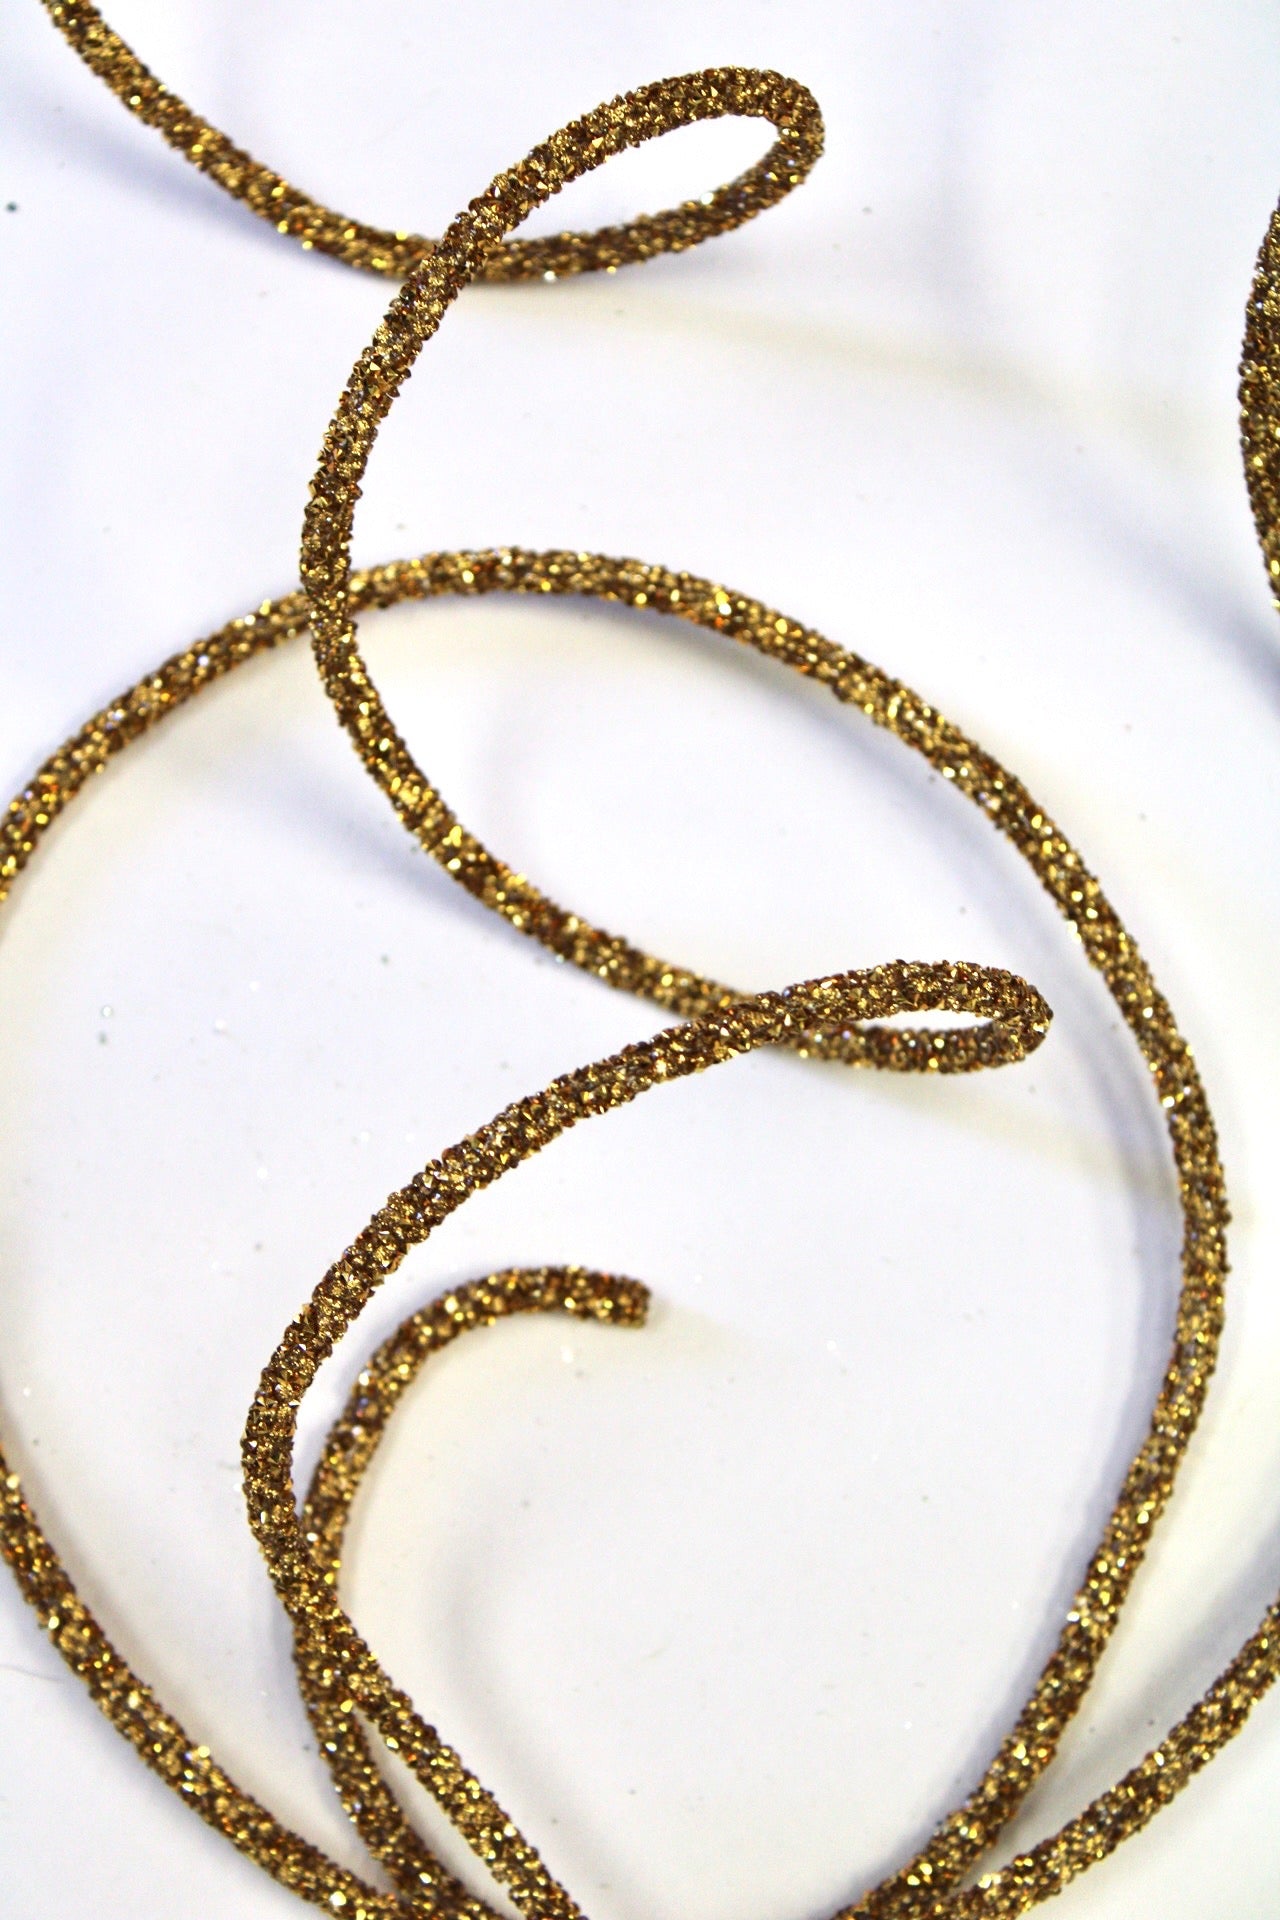 Gold Glittered Rope Garland